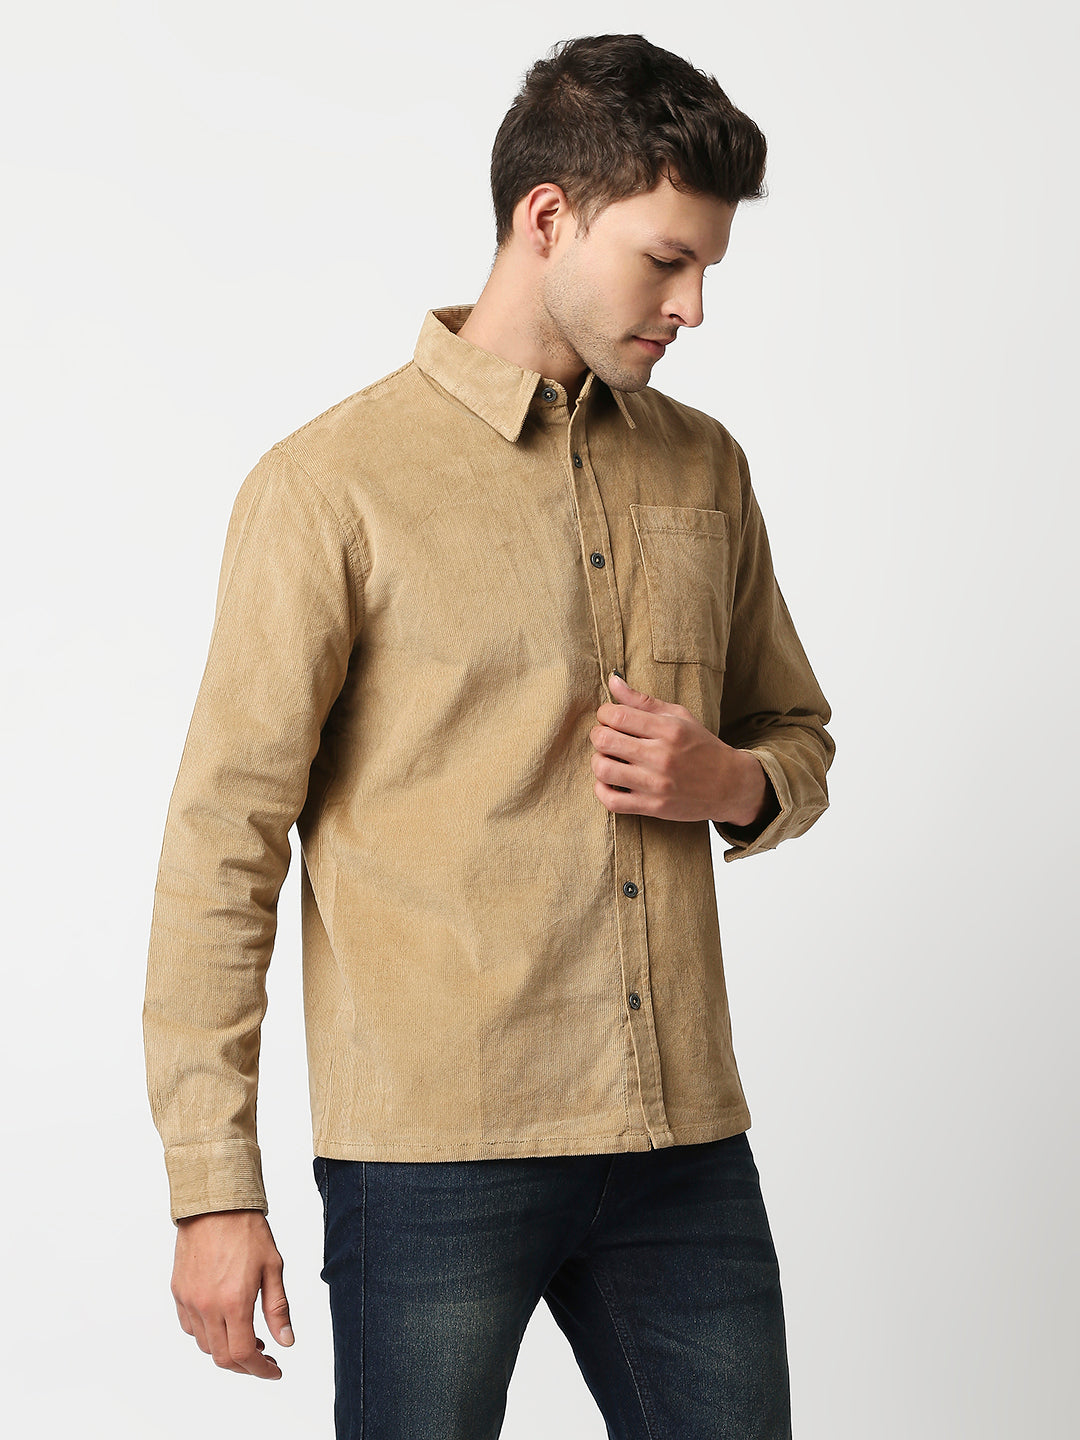 Buy Blamblack Men's Round Neck Beige Color Full Sleeves Shirt